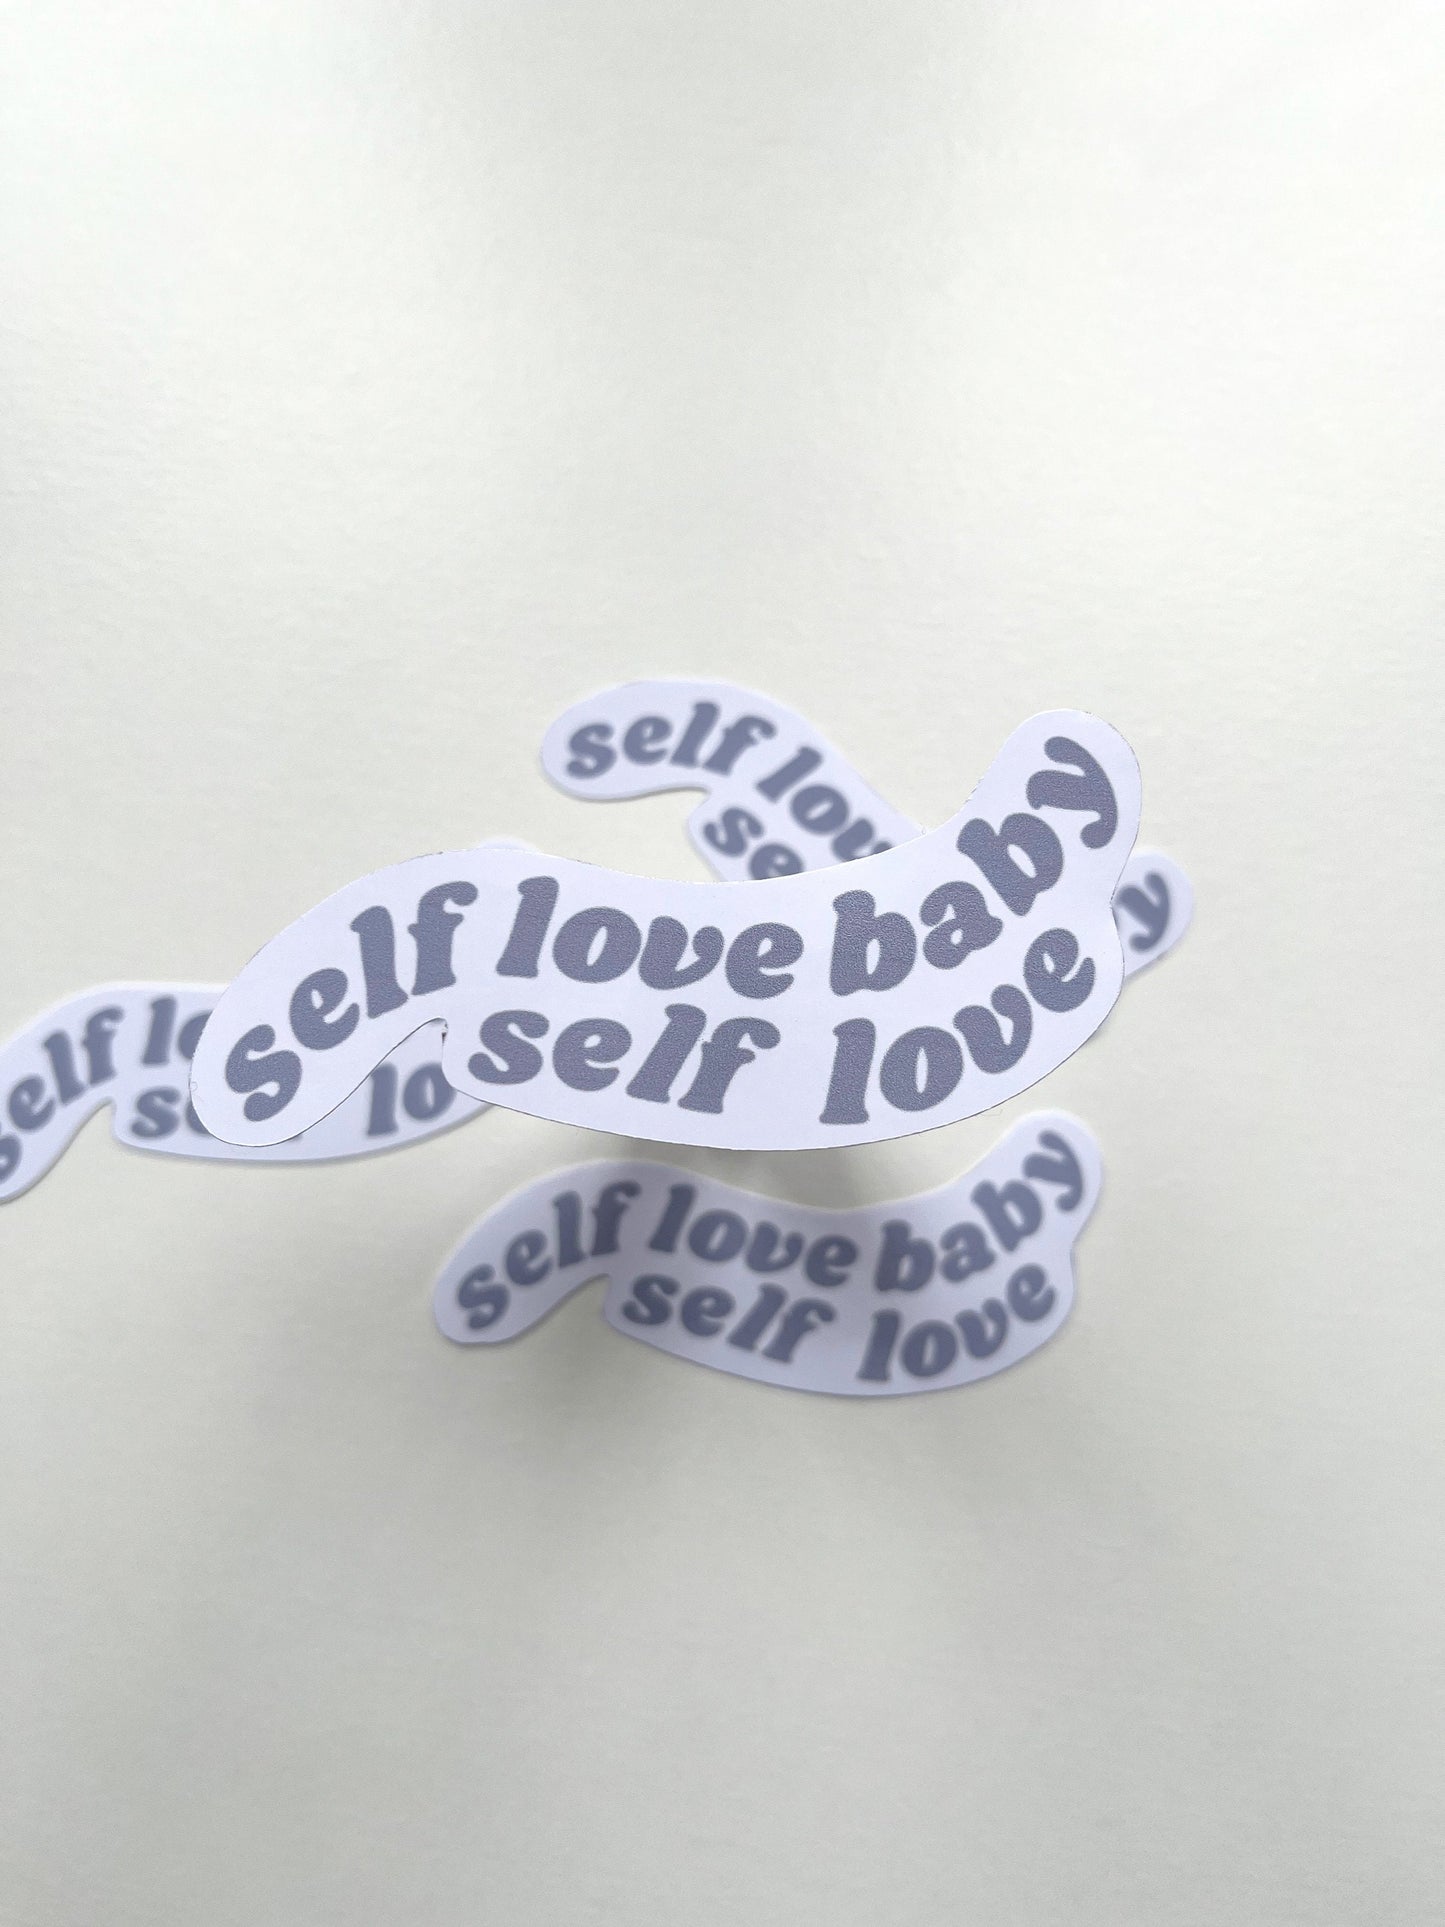 Self love baby self love sticker